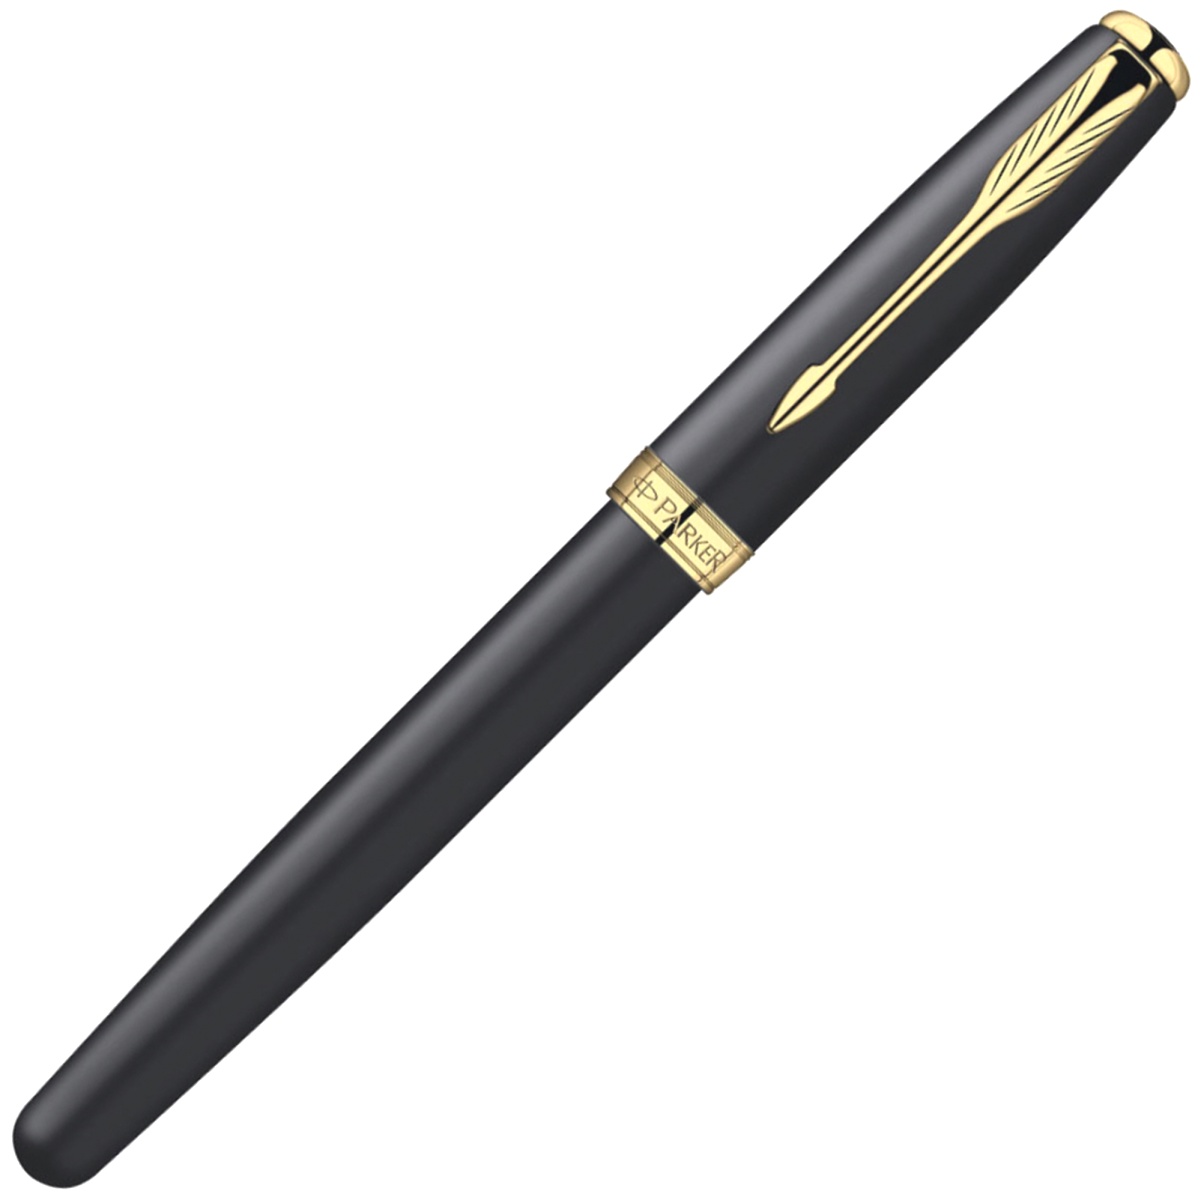  Перьевая ручка Parker Sonnet F528, MattBlack GT (Перо M), фото 2